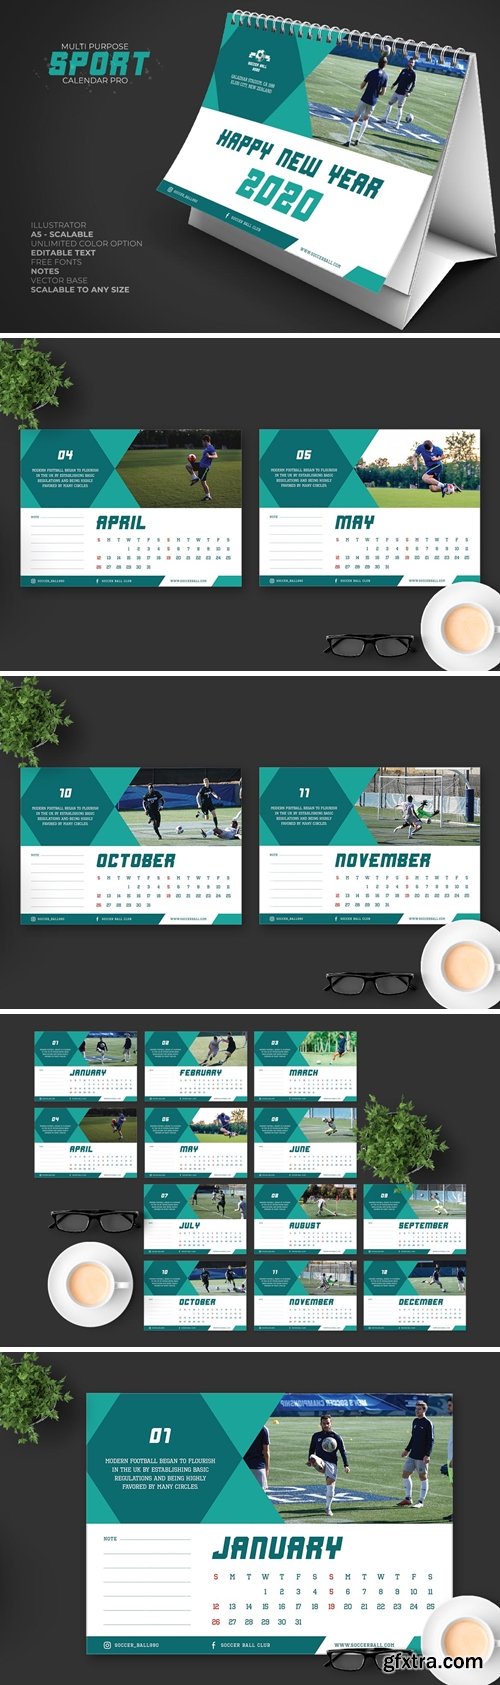 2020 Sport Calendar Desk Pro